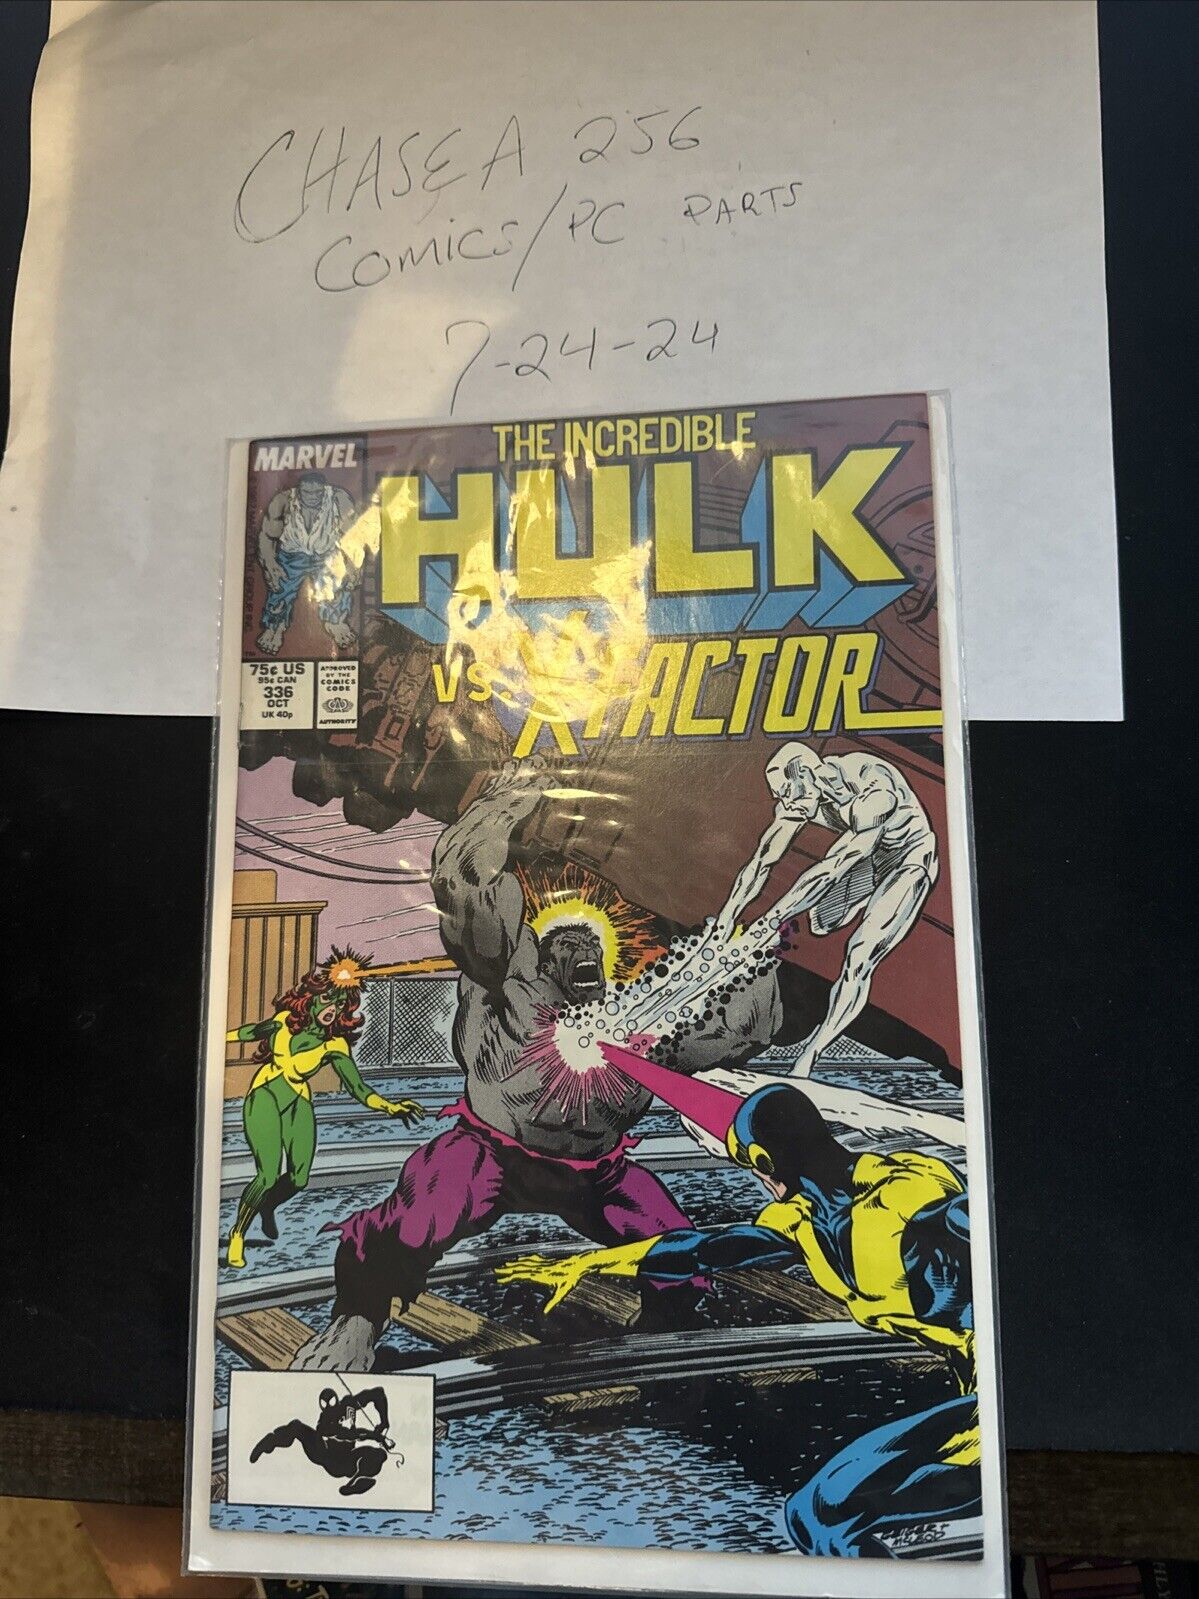 The Incredible Hulk #336 (Marvel Comics October 1987)